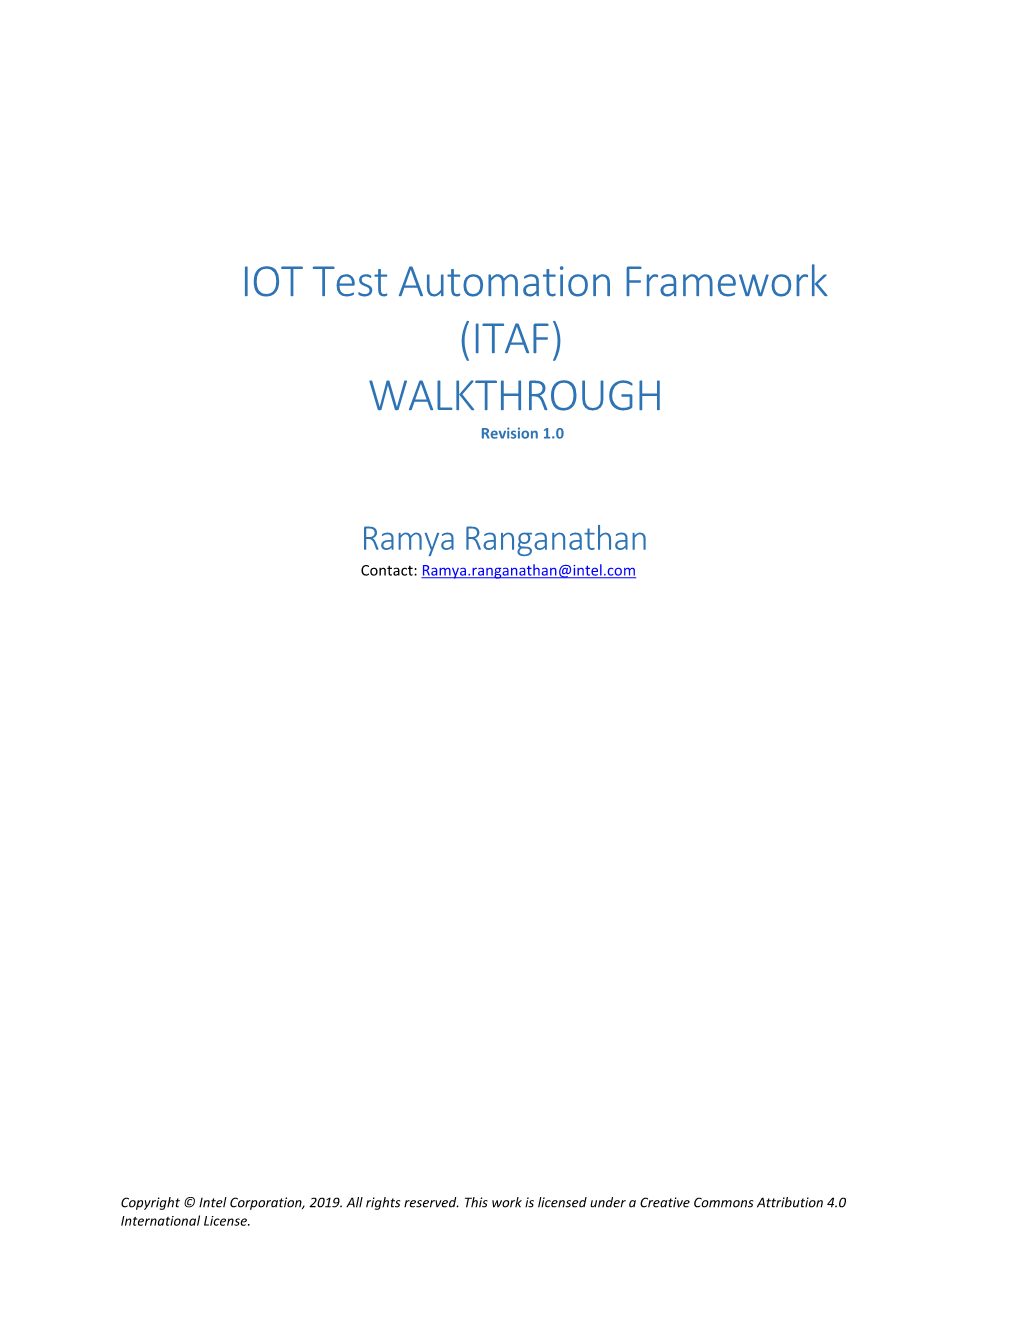 IOT Test Automation Framework (ITAF) WALKTHROUGH Revision 1.0